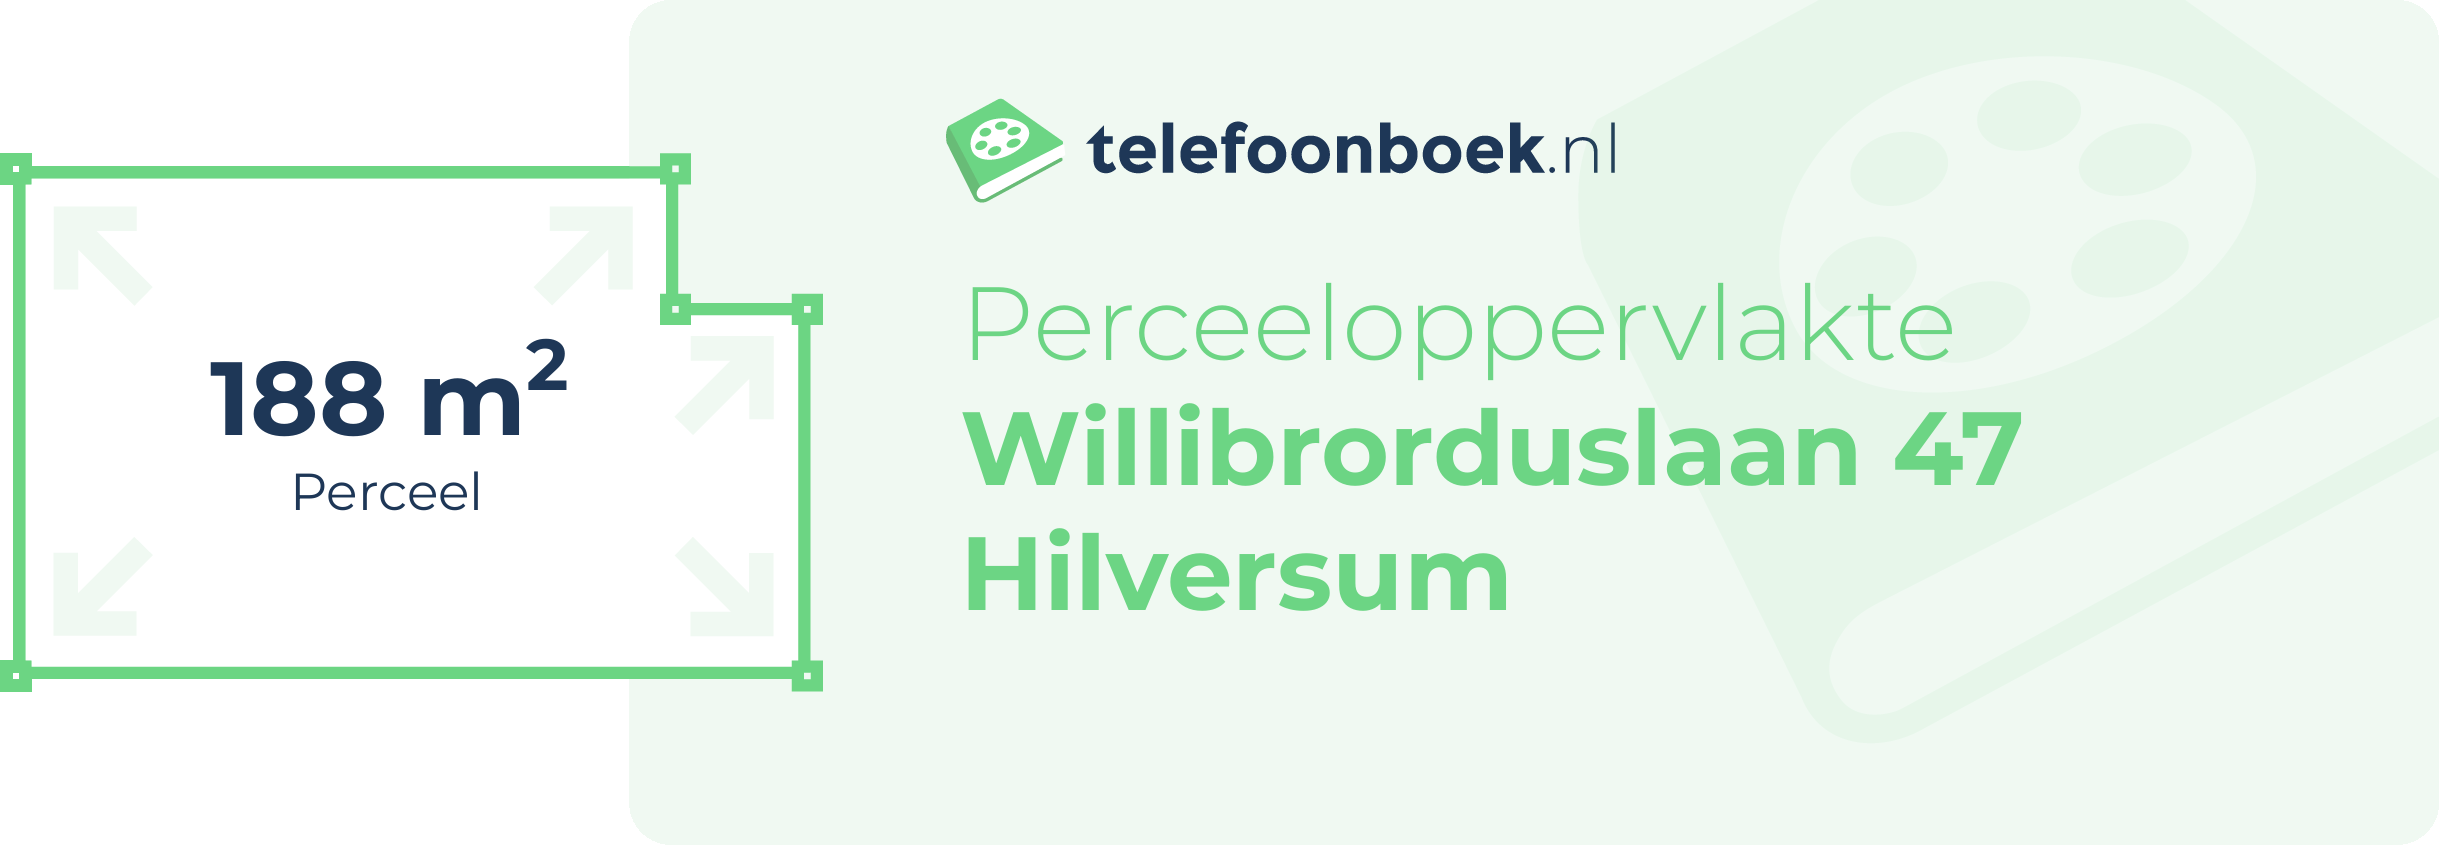 Perceeloppervlakte Willibrorduslaan 47 Hilversum